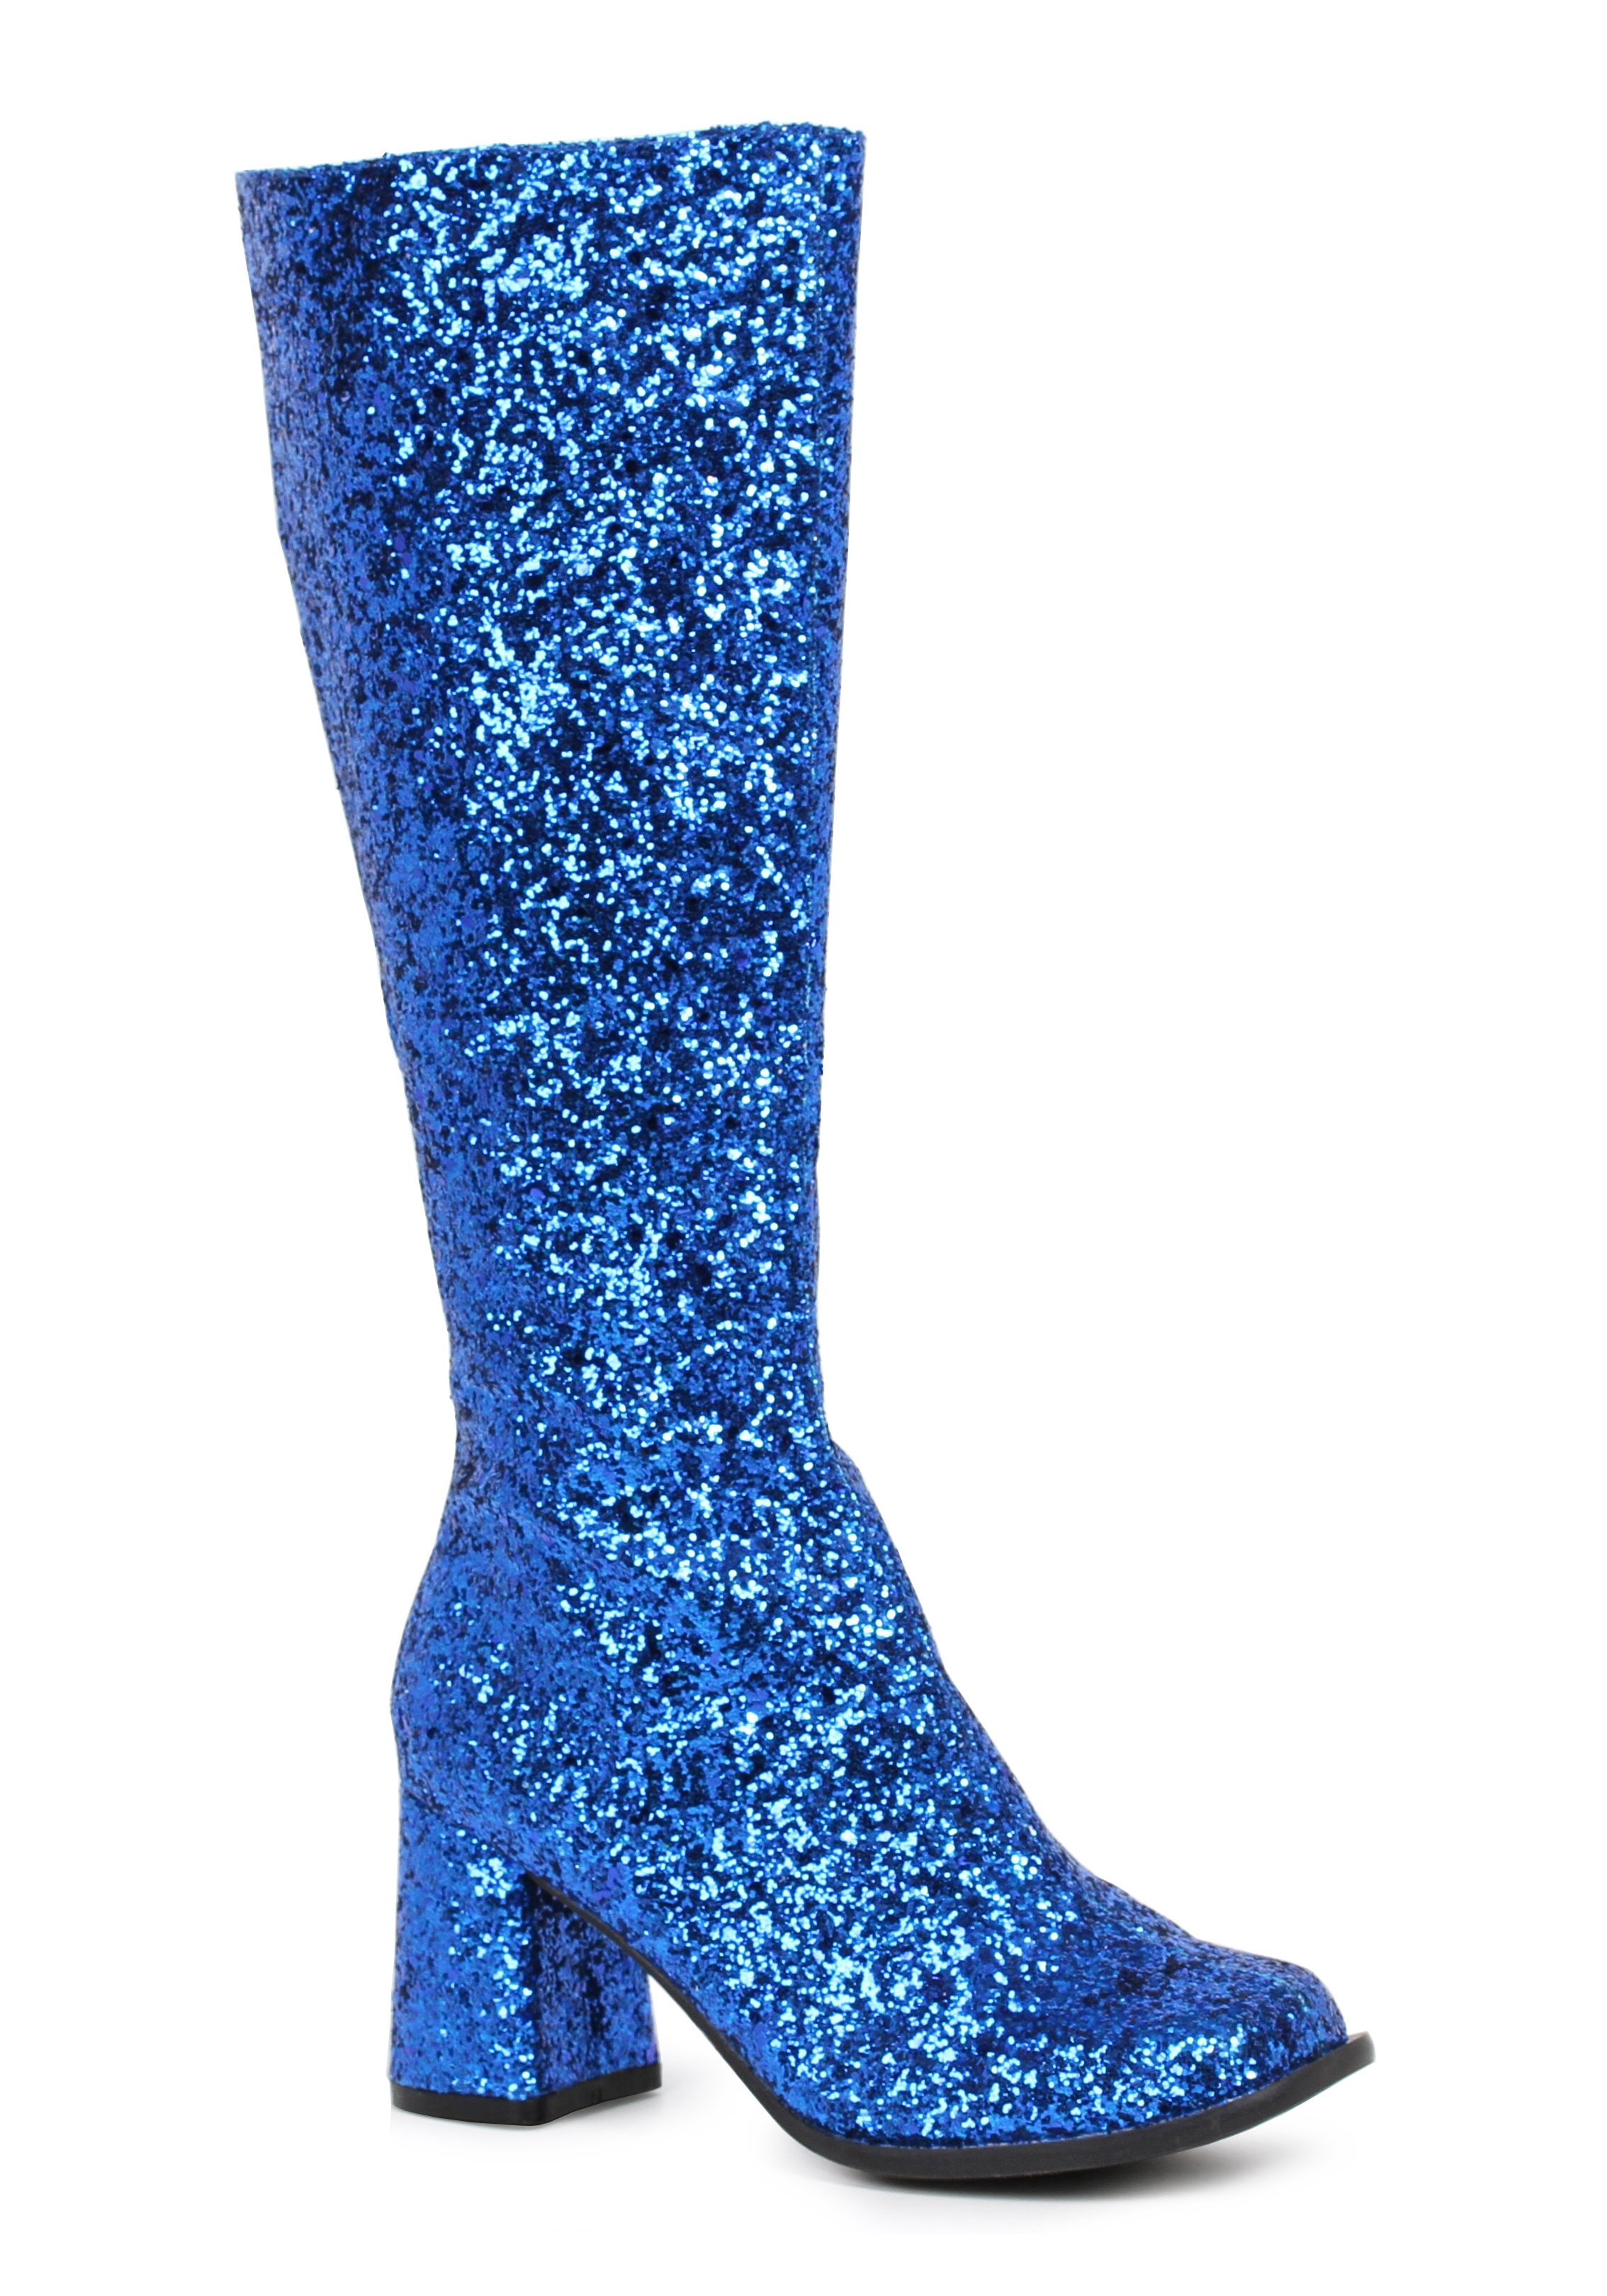 Ellie Shoes GOGO-G 3 Inch Silver Thin Glitter Gogo Boot Women's Shoe ...